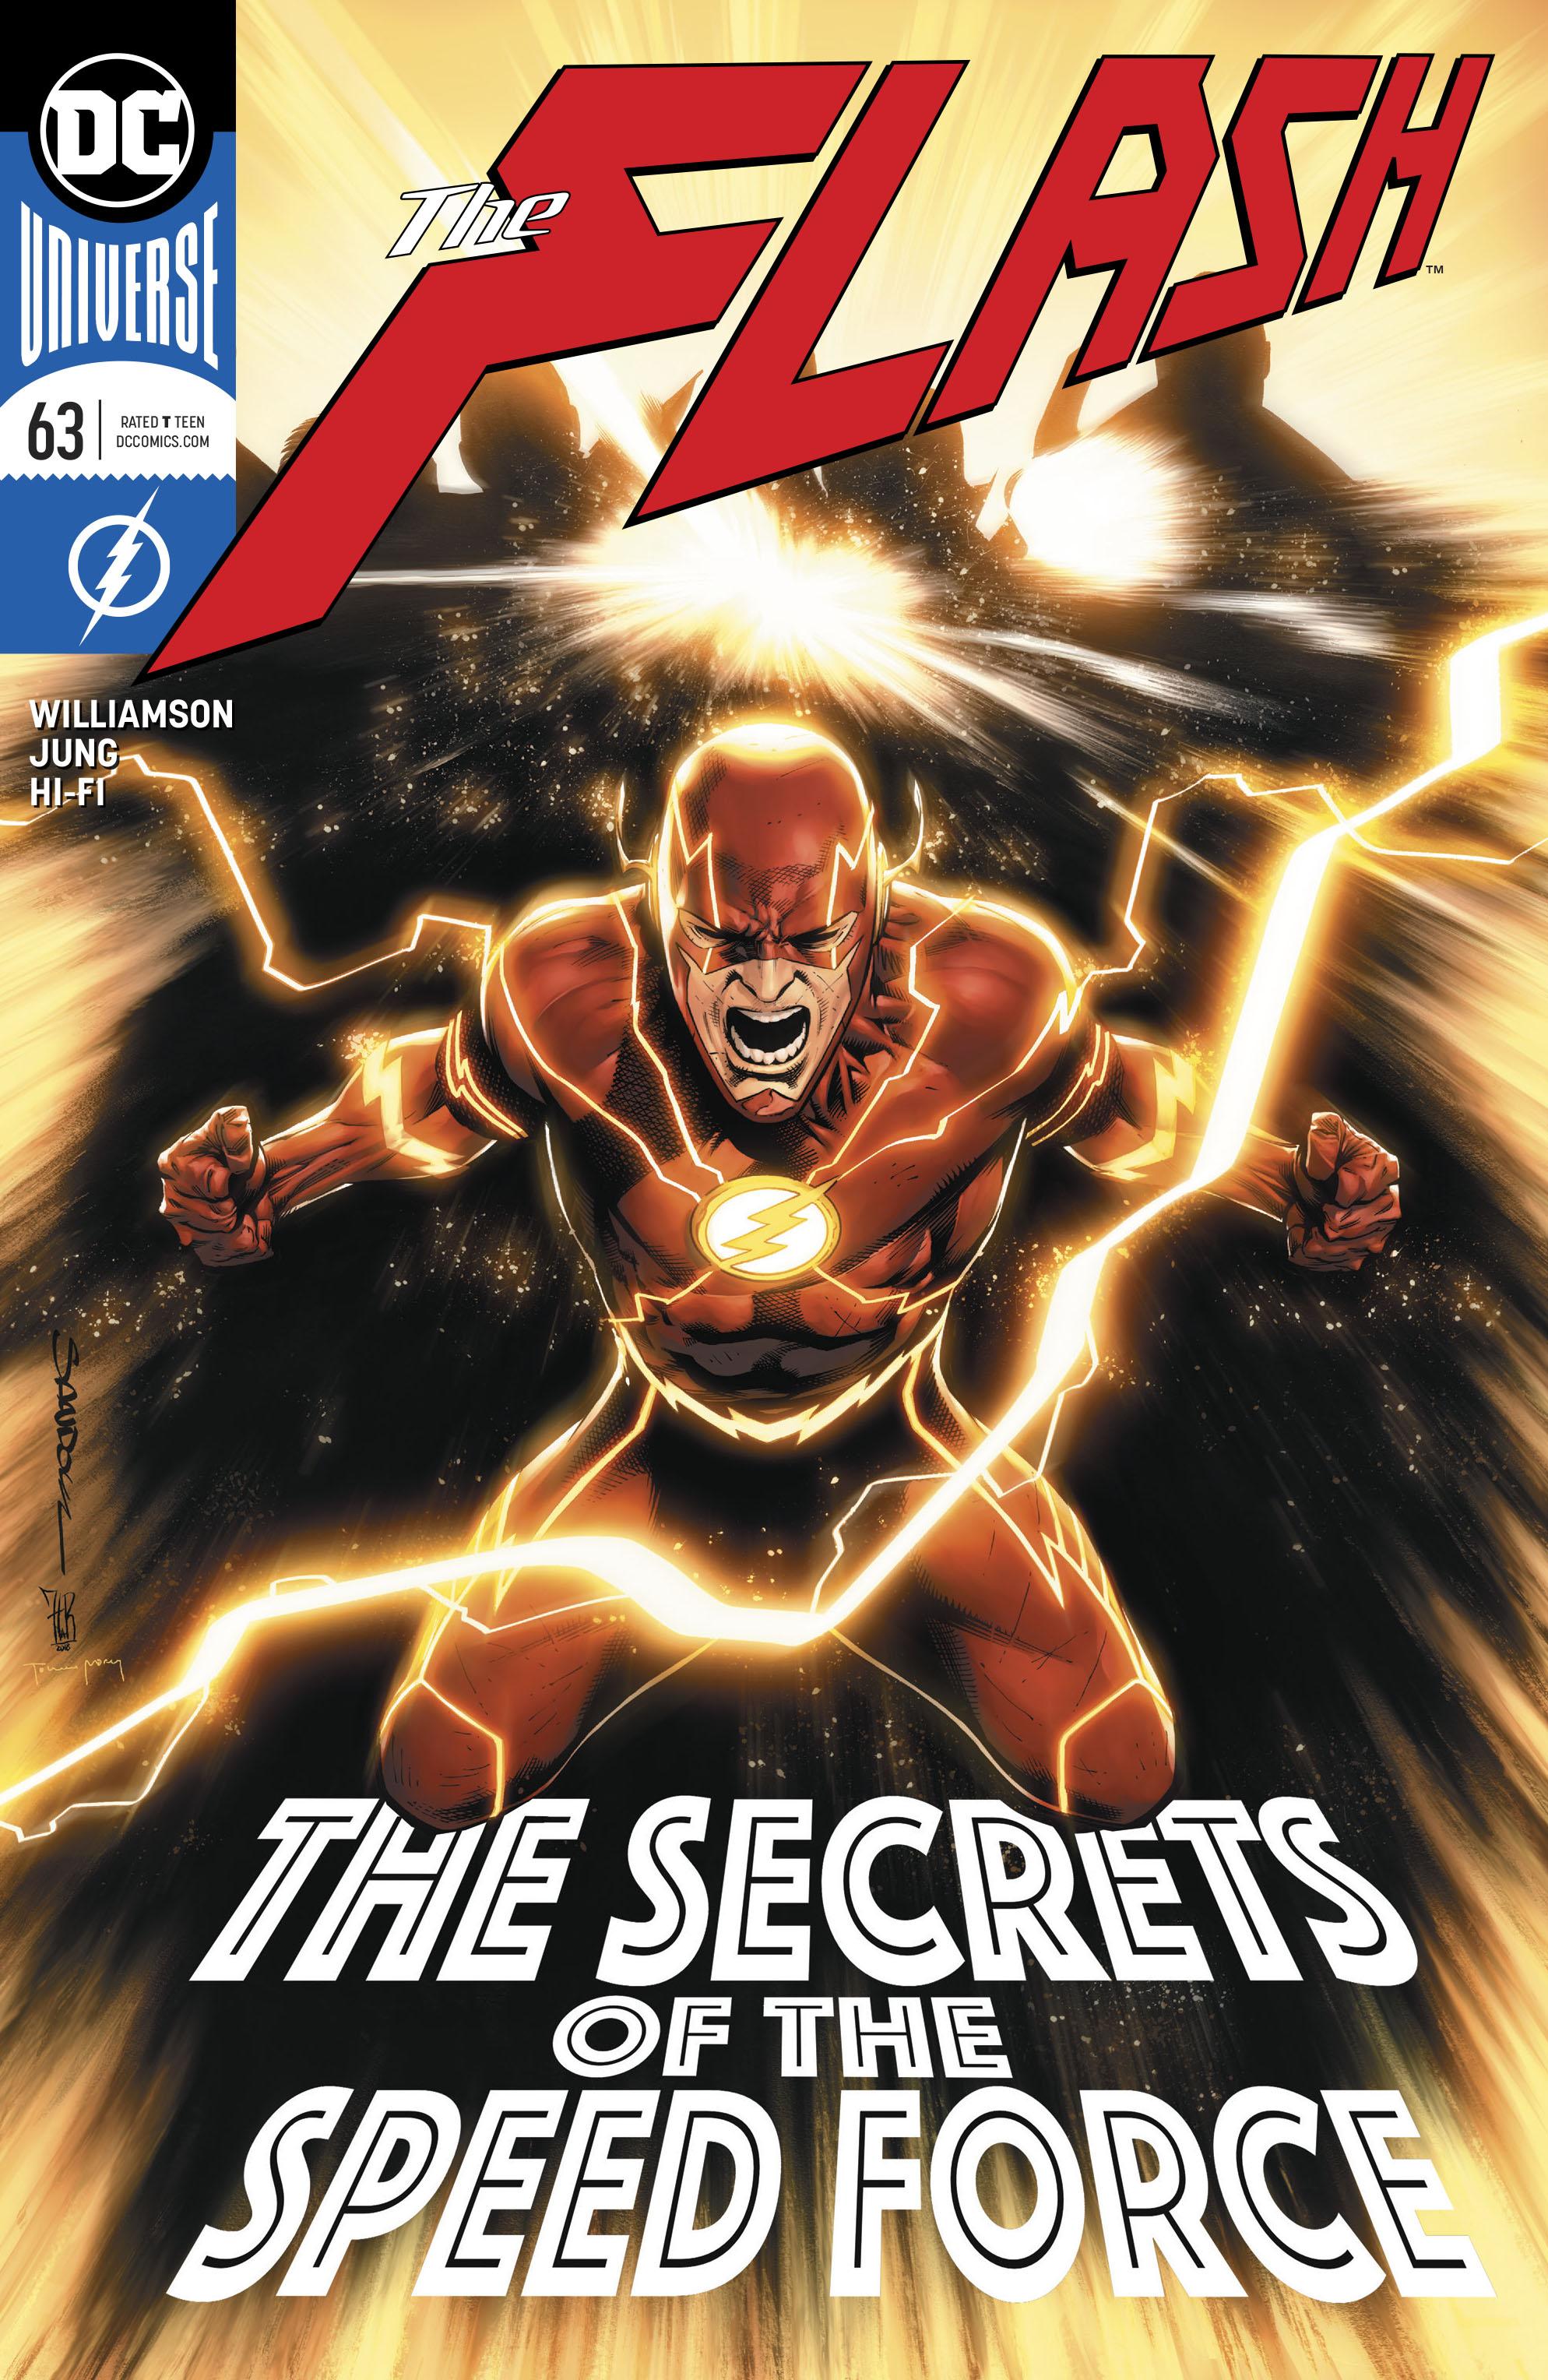 The Flash Vol. 5 #63